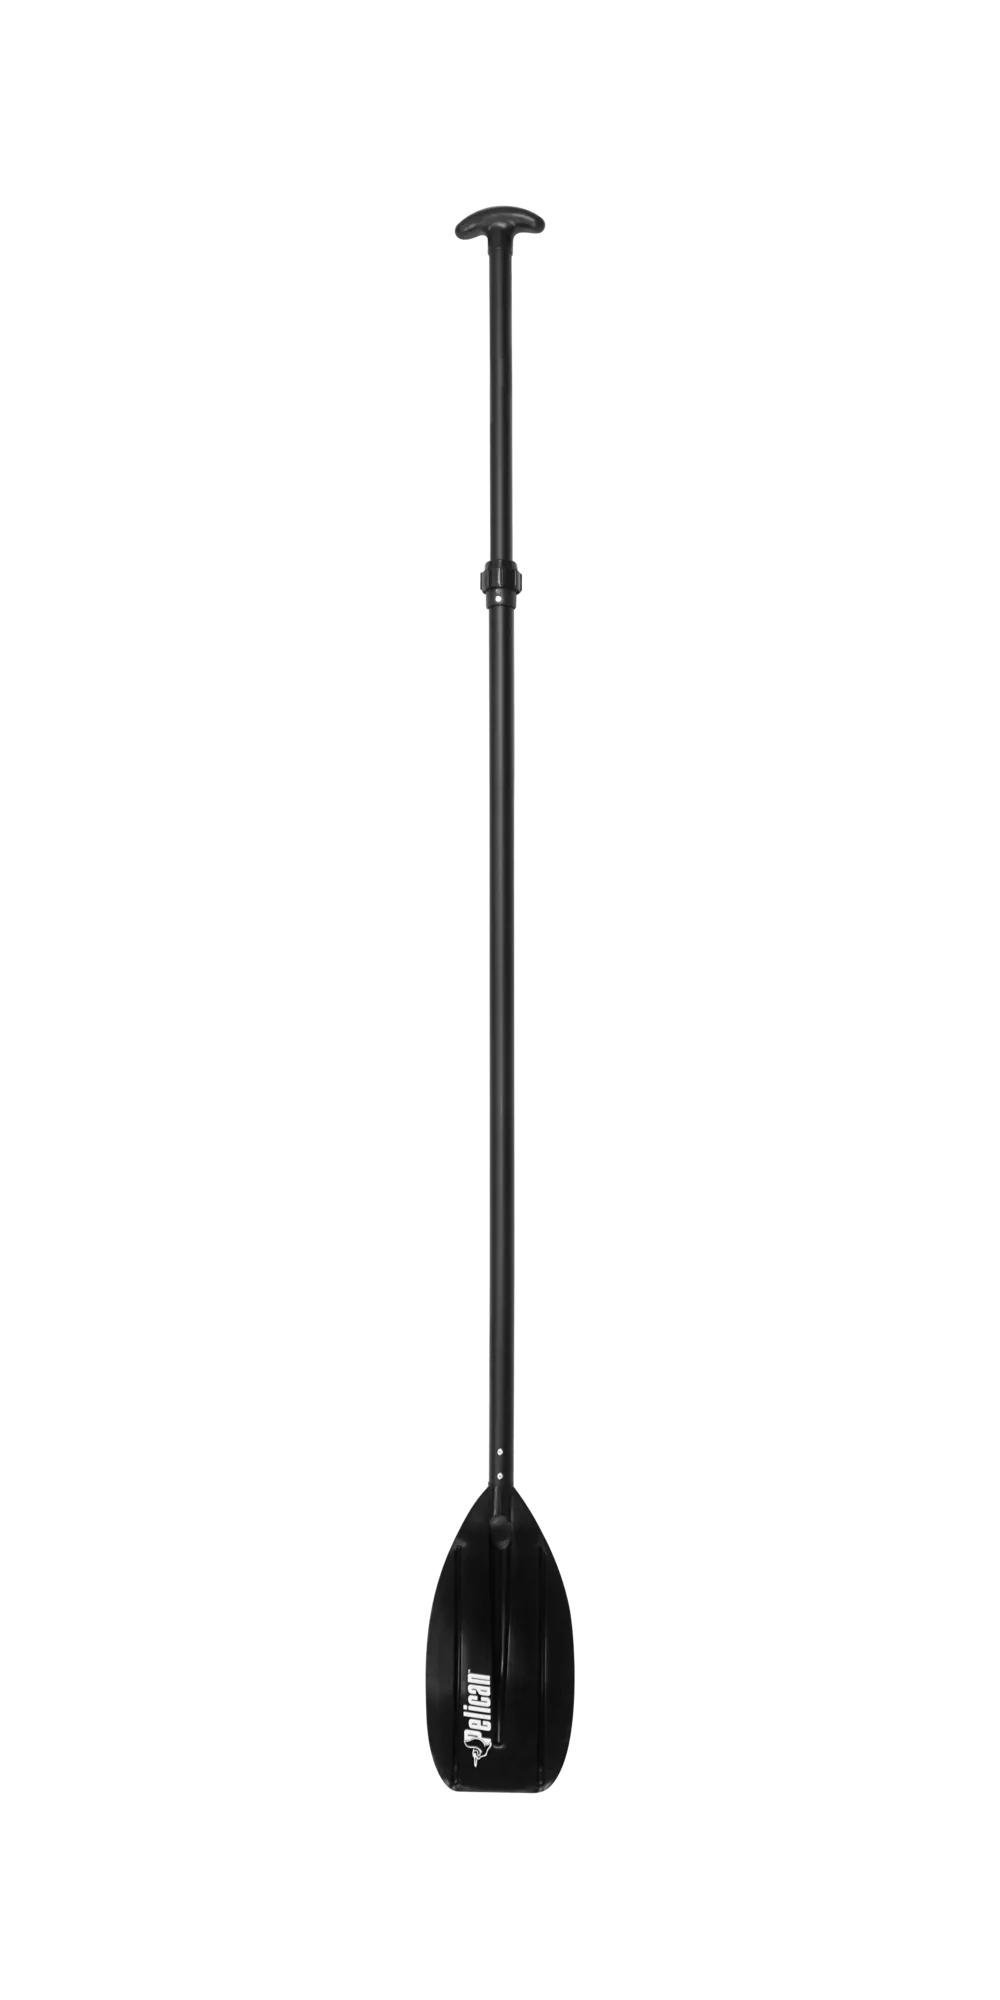 PELICAN - Adjustable Junior SUP Paddle 140-180 cm (55-70") - Black - PS1114-1-00 - TOP